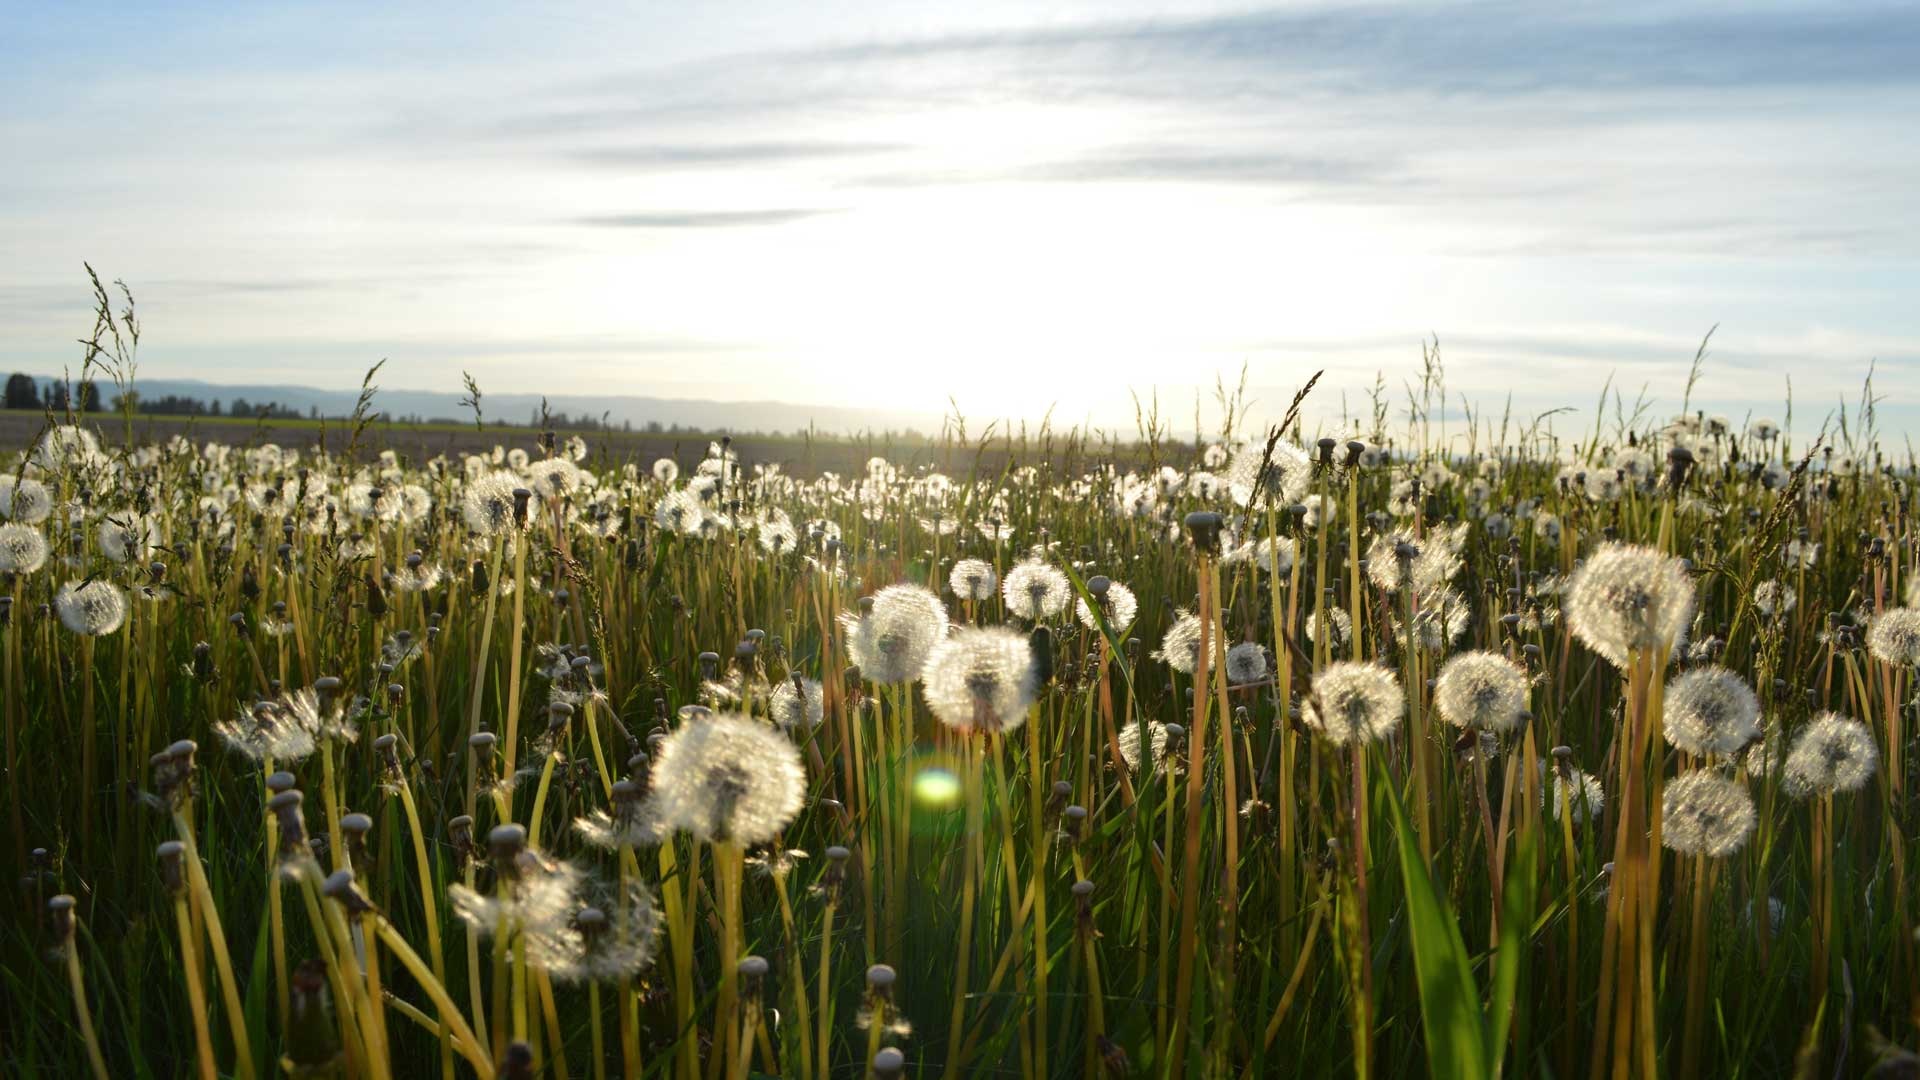 A big field of dandelions